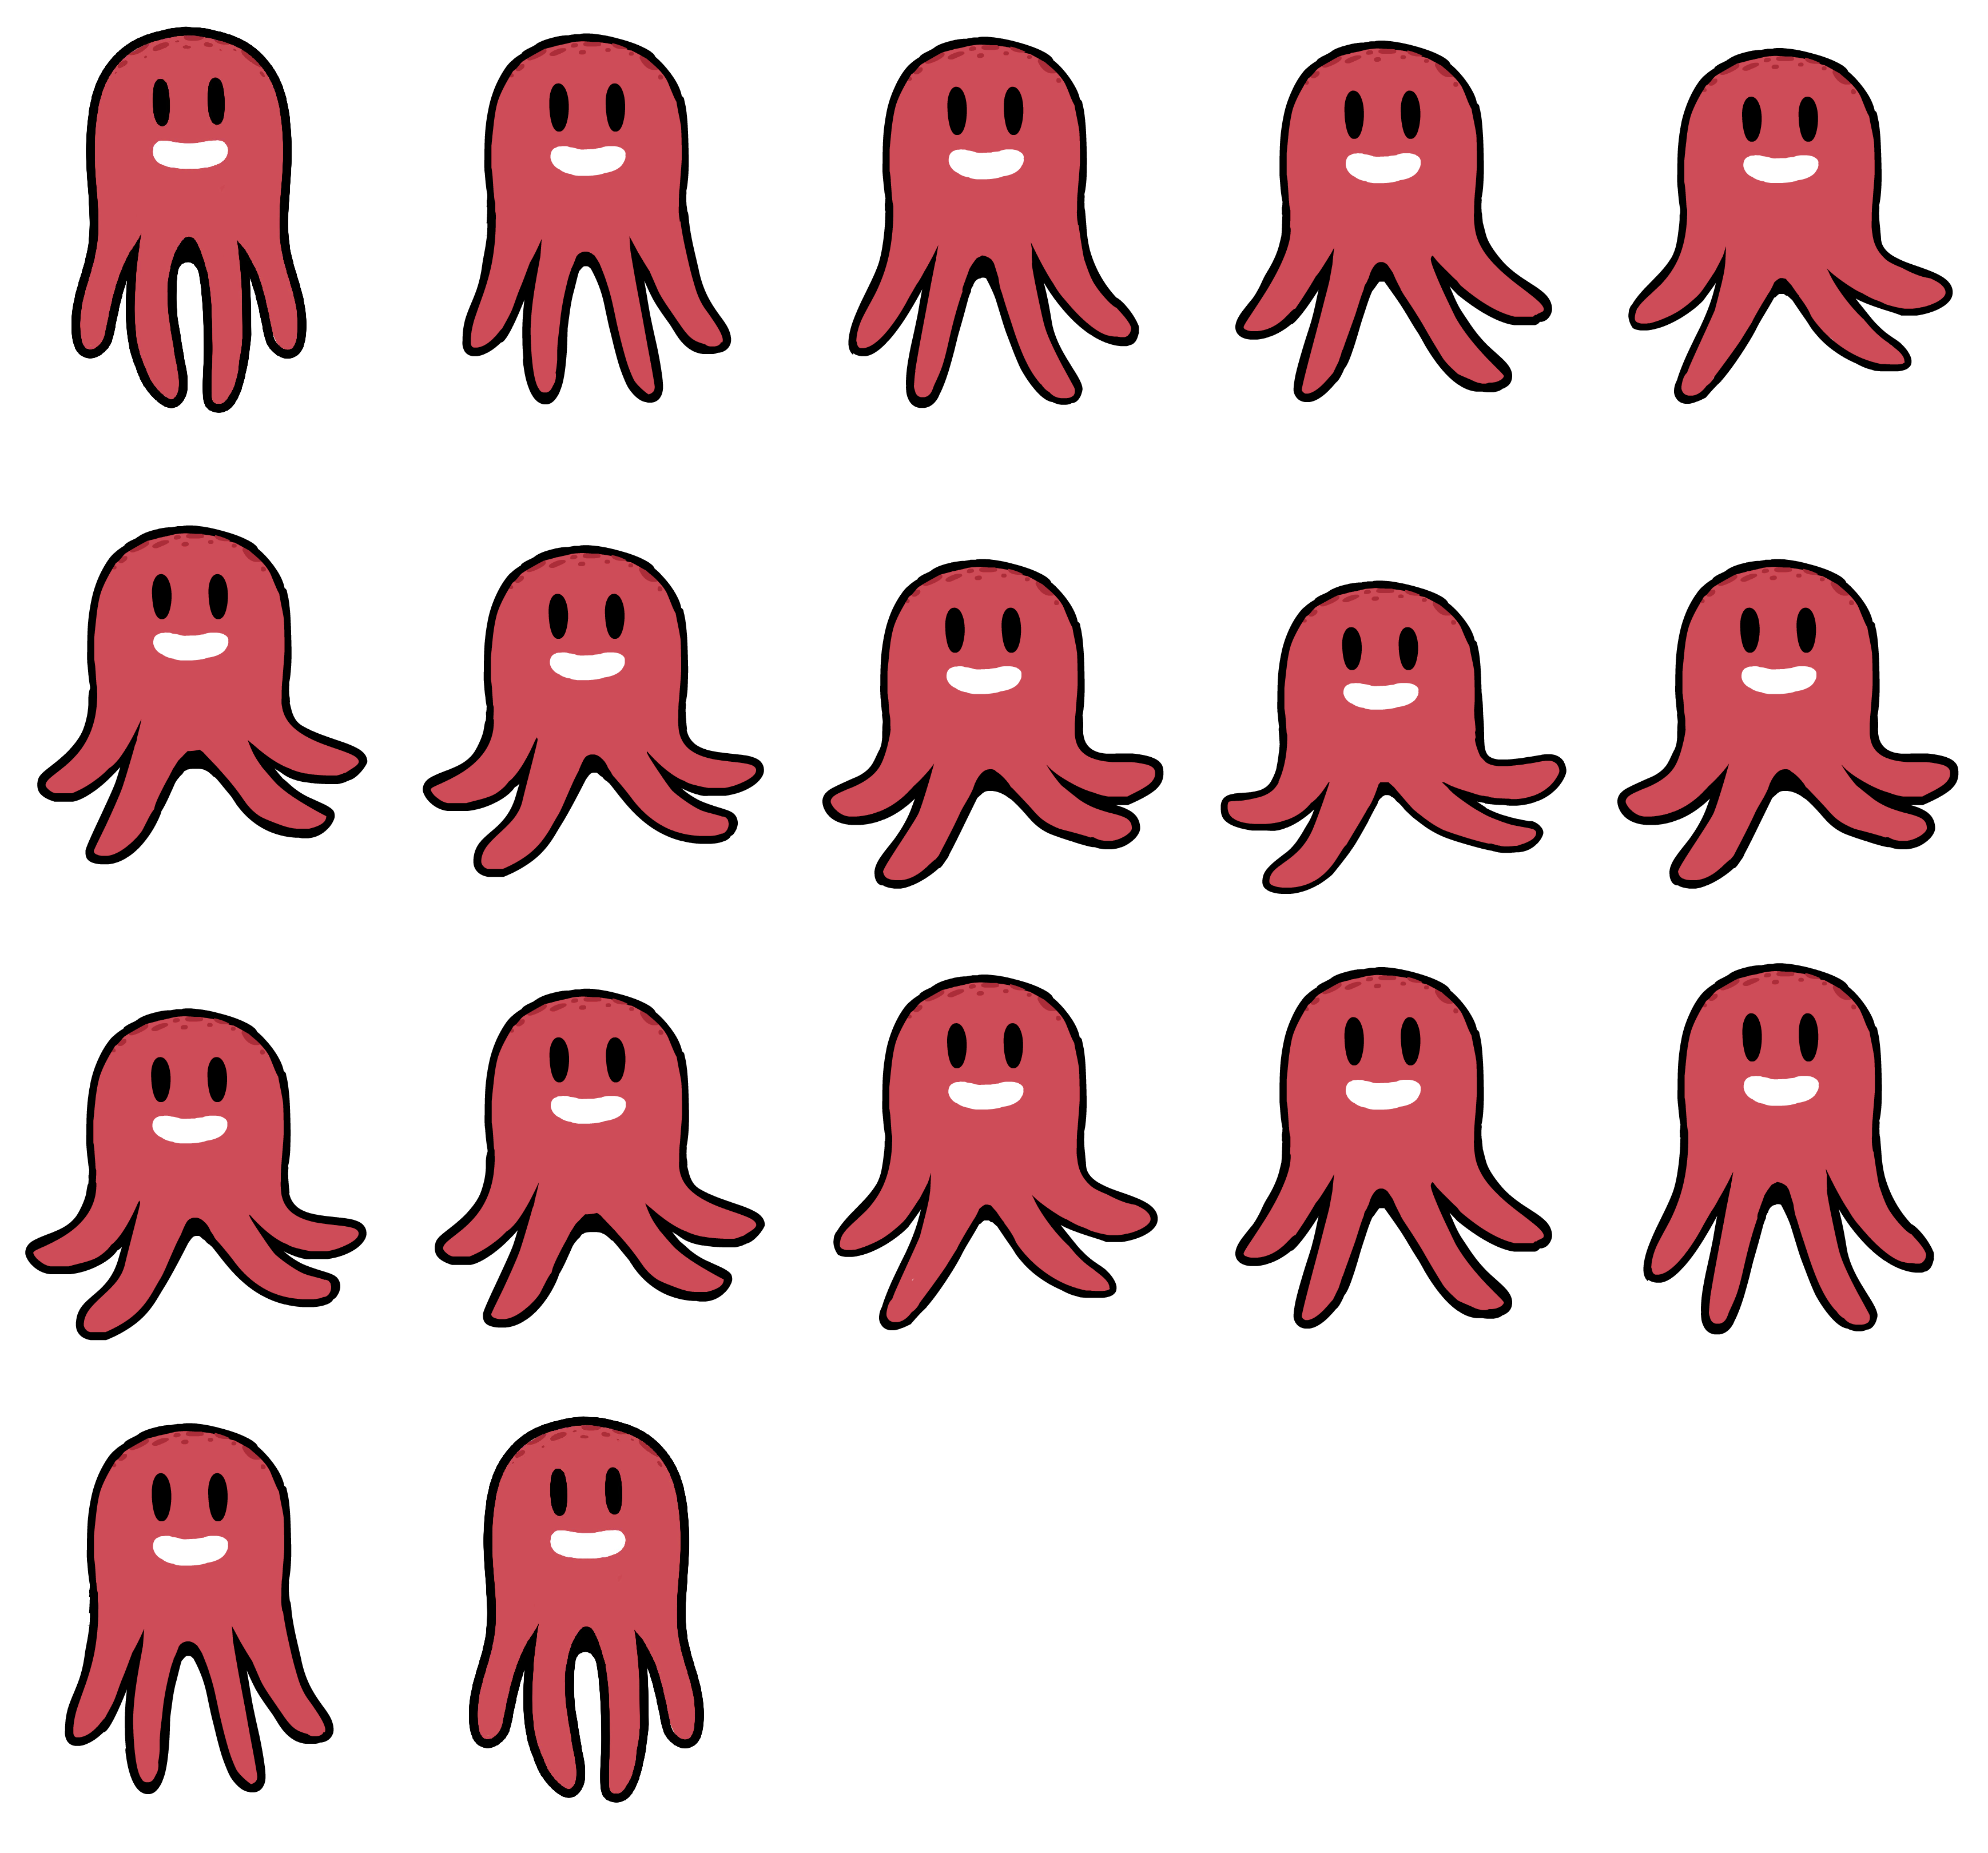 Octopus Sprite Sheet